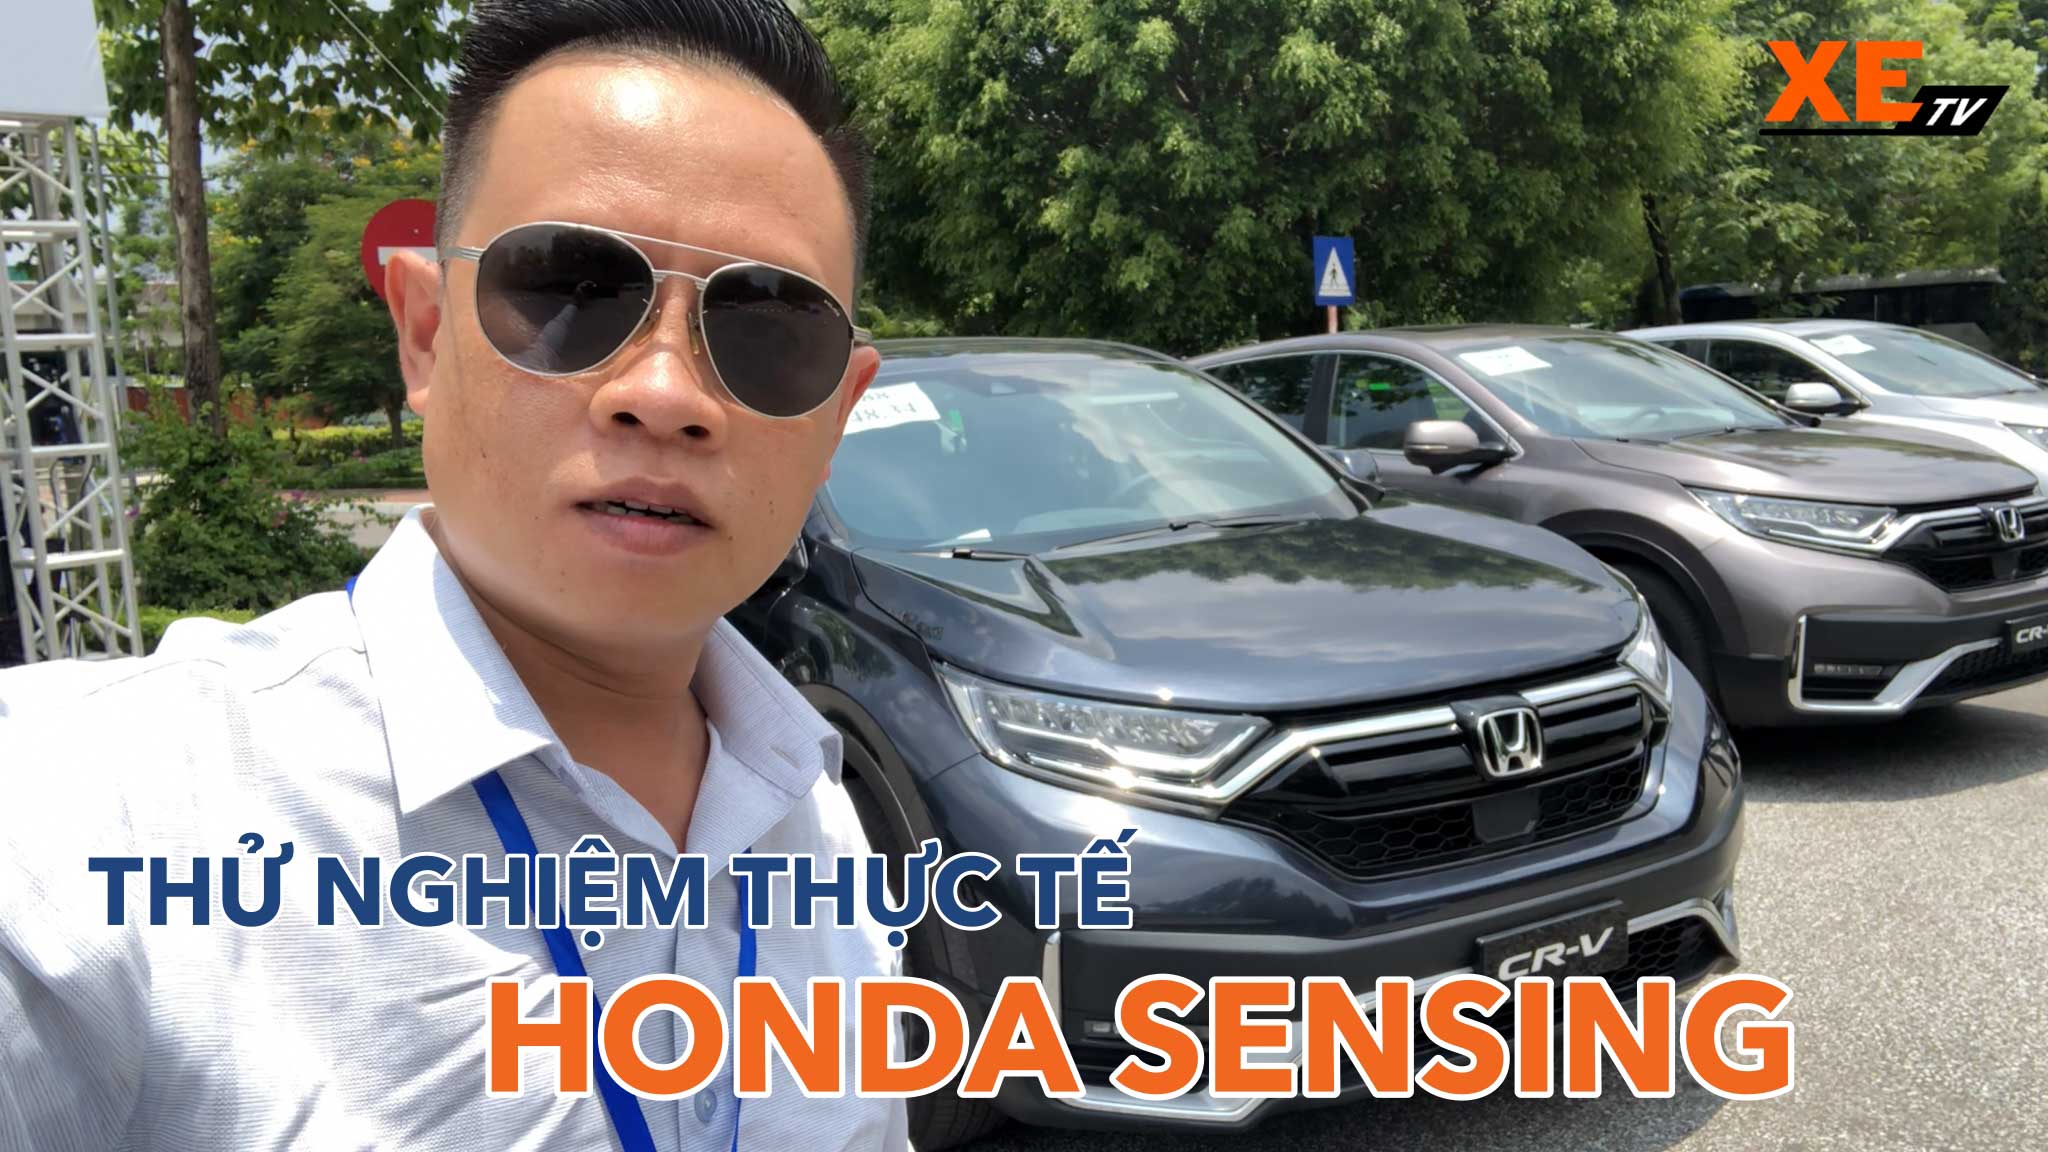 XEtv-Honda-Sensing-thu-nghiem-1-2.jpg